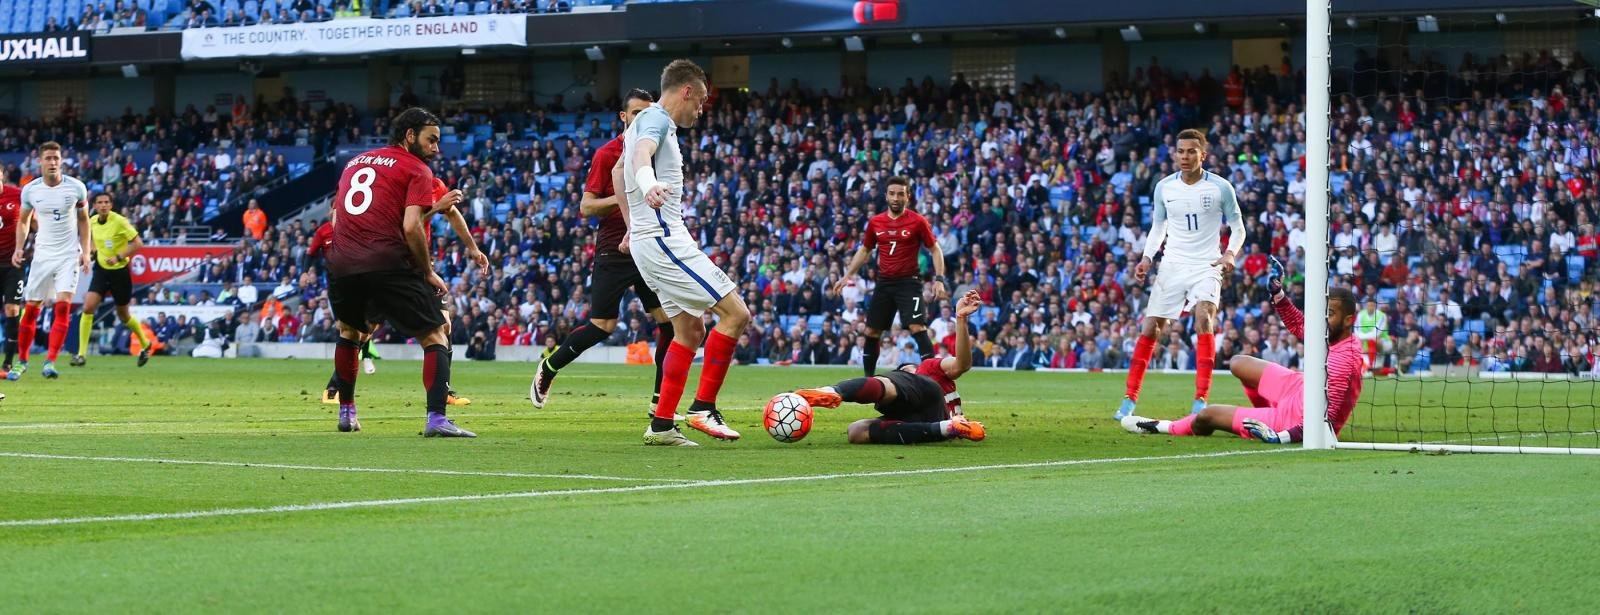 England 2-1 Turkey: Kane & Vardy score as the Three Lions win Euro 2016 warm-up game